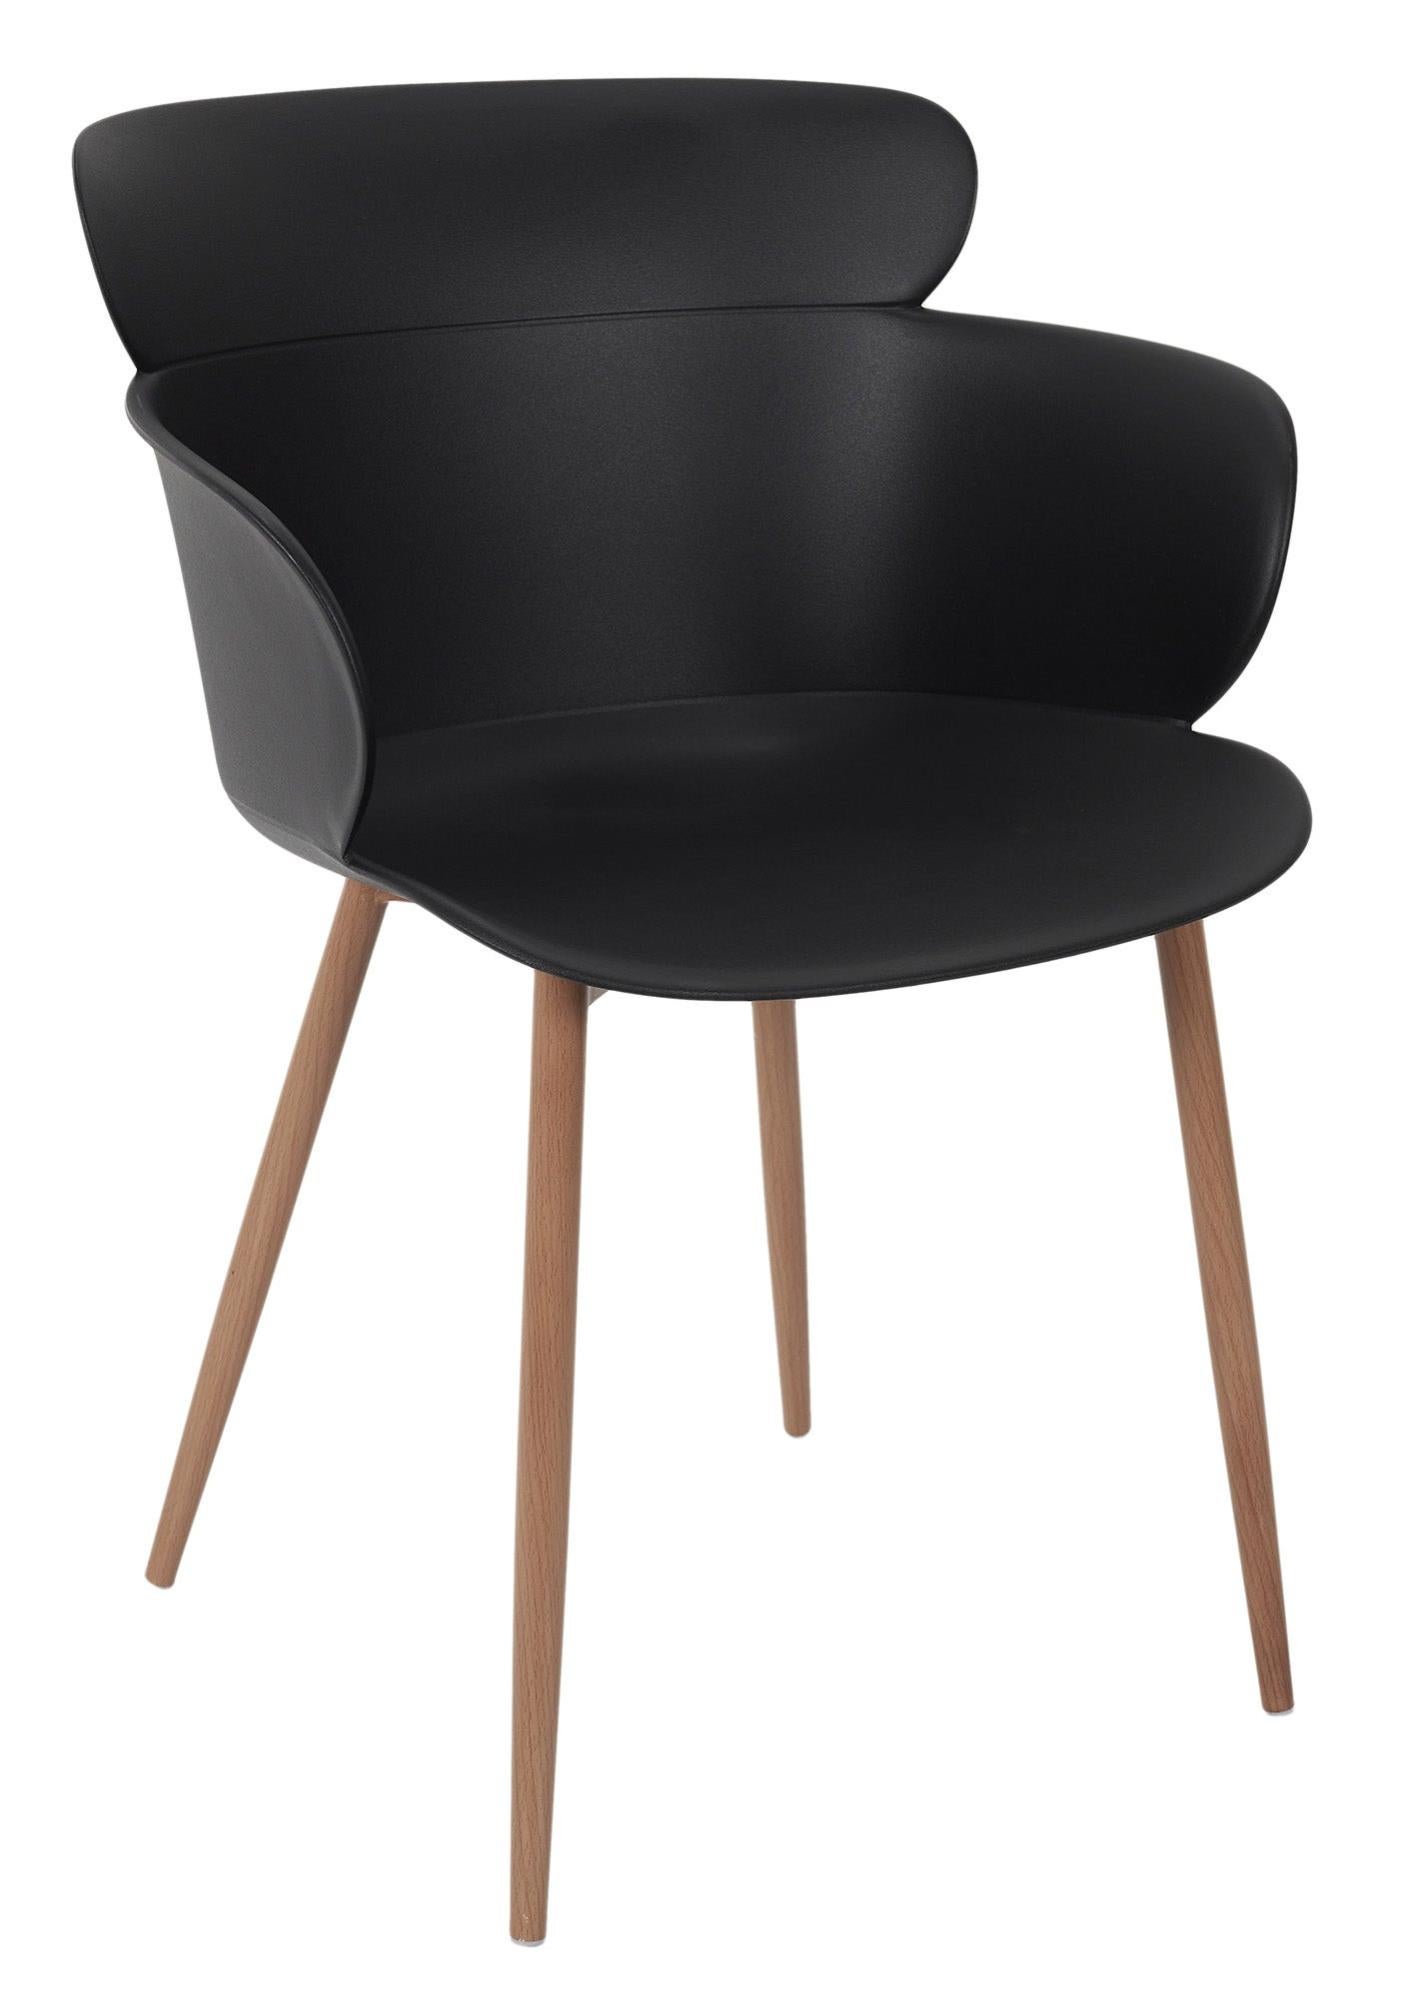 Set de 2 sillas de comedor lorens de madera color negro de 82x54x60cm